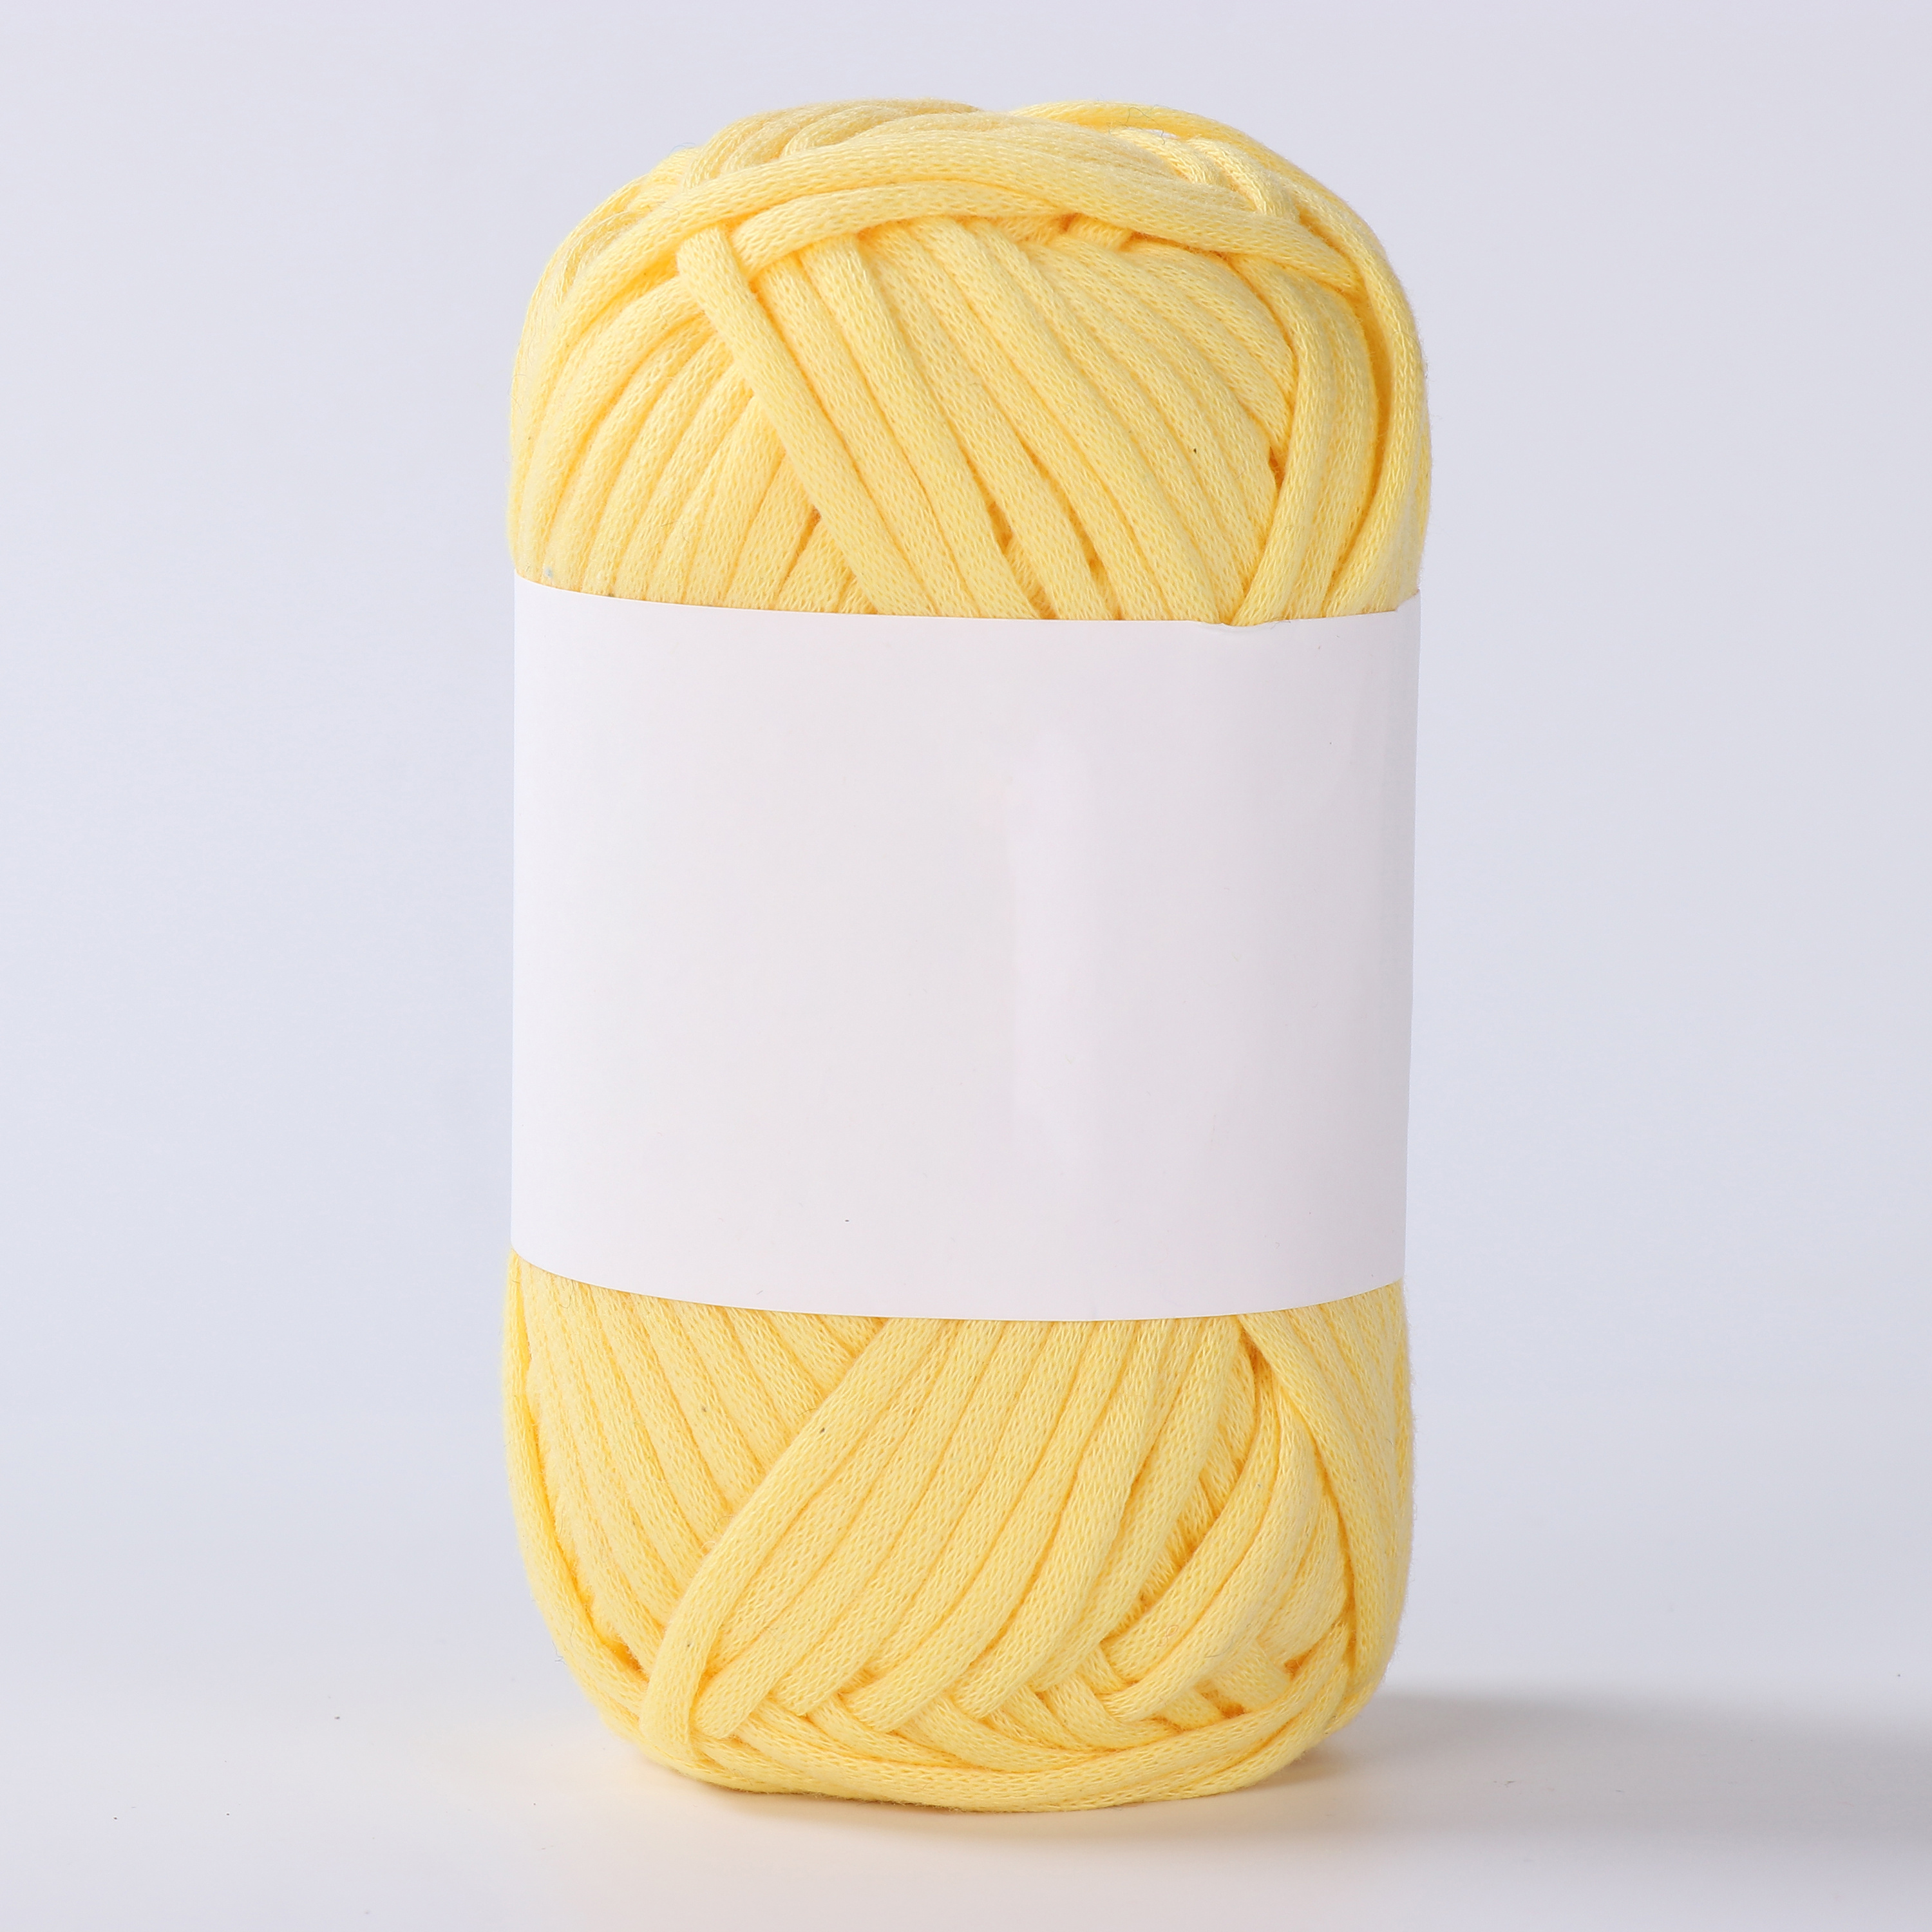 Uheoun Bulk Yarn Clearance Sale for Crocheting, 1PC 50g Chunky Colorful  Hand Knitting Baby Milk Cotton Crochet Knitwear Wool B 